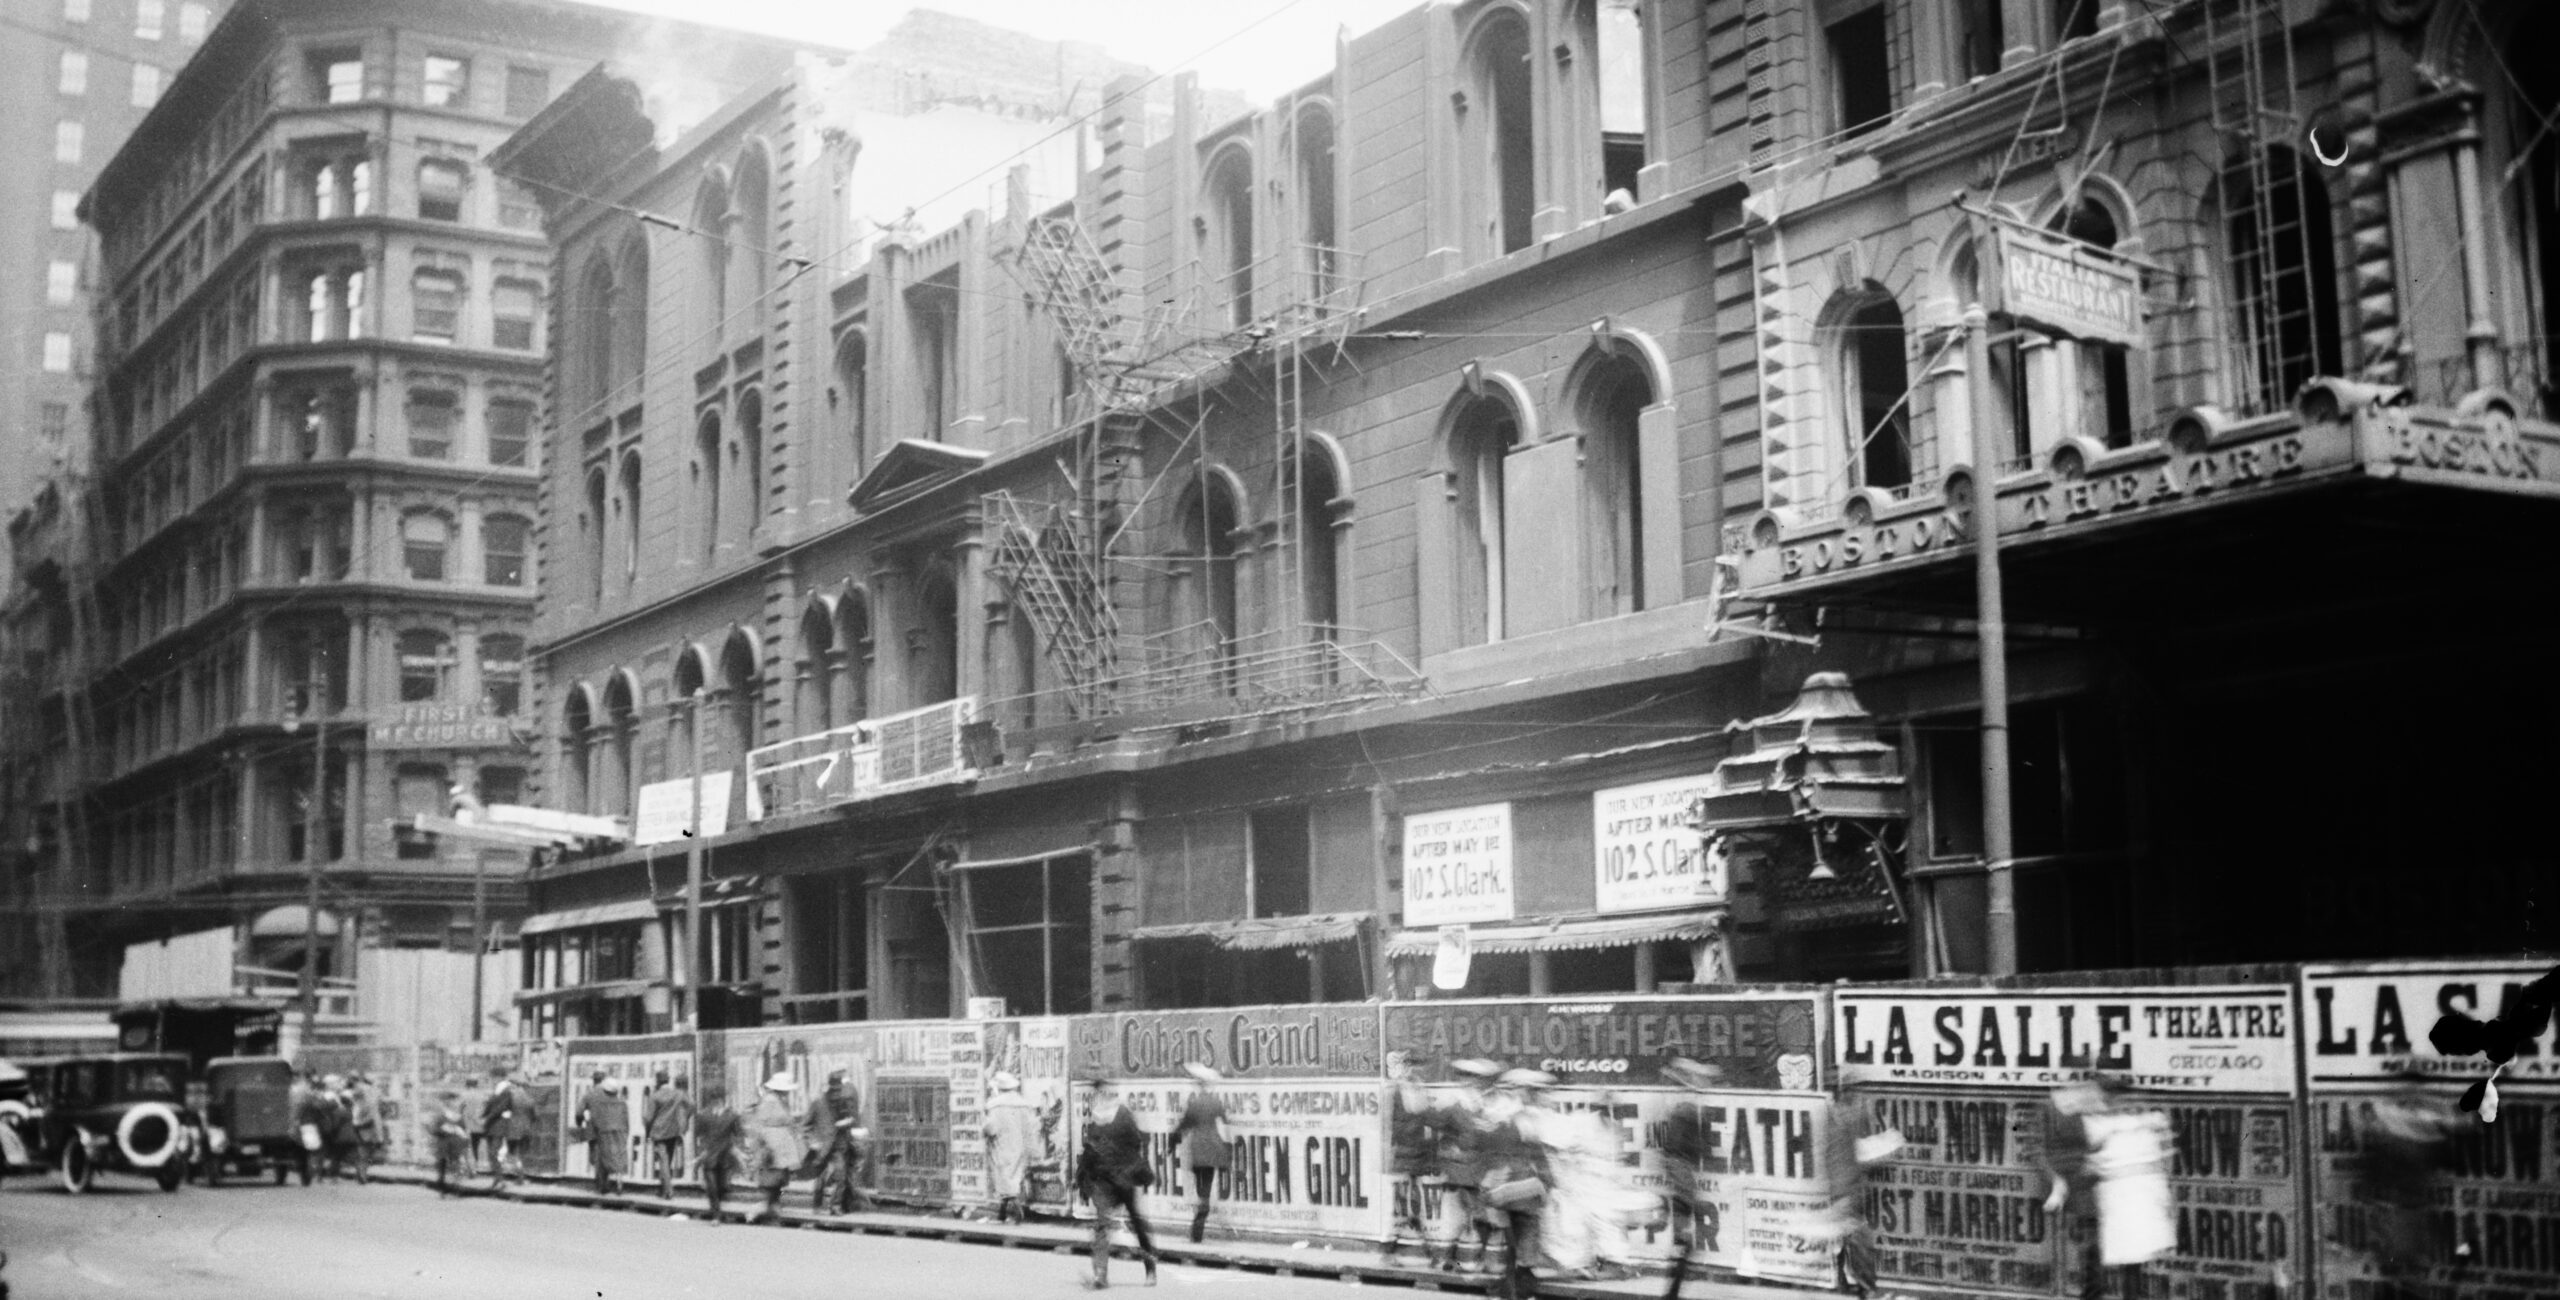 Demolition Of The Methodist Church Block, May 1922